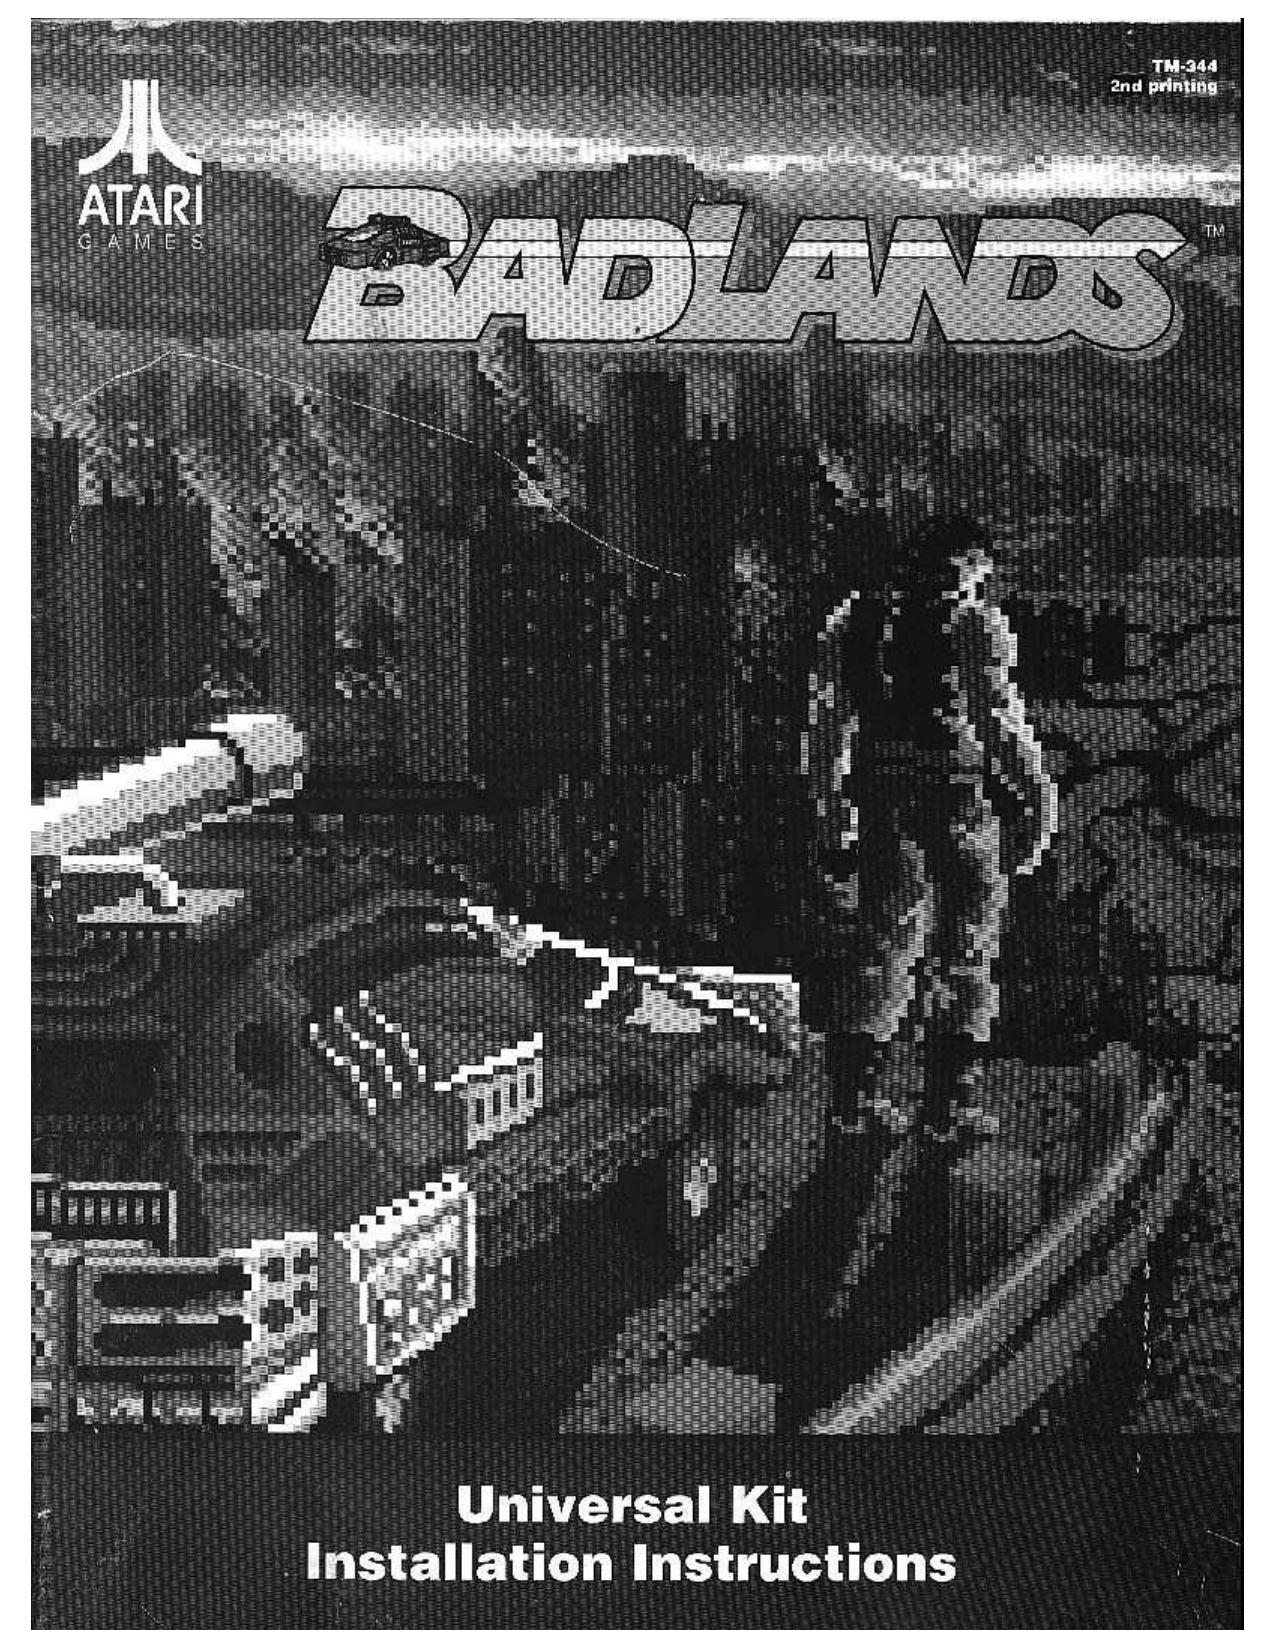 Badlands Universal Kit TM-344 2rd Printing